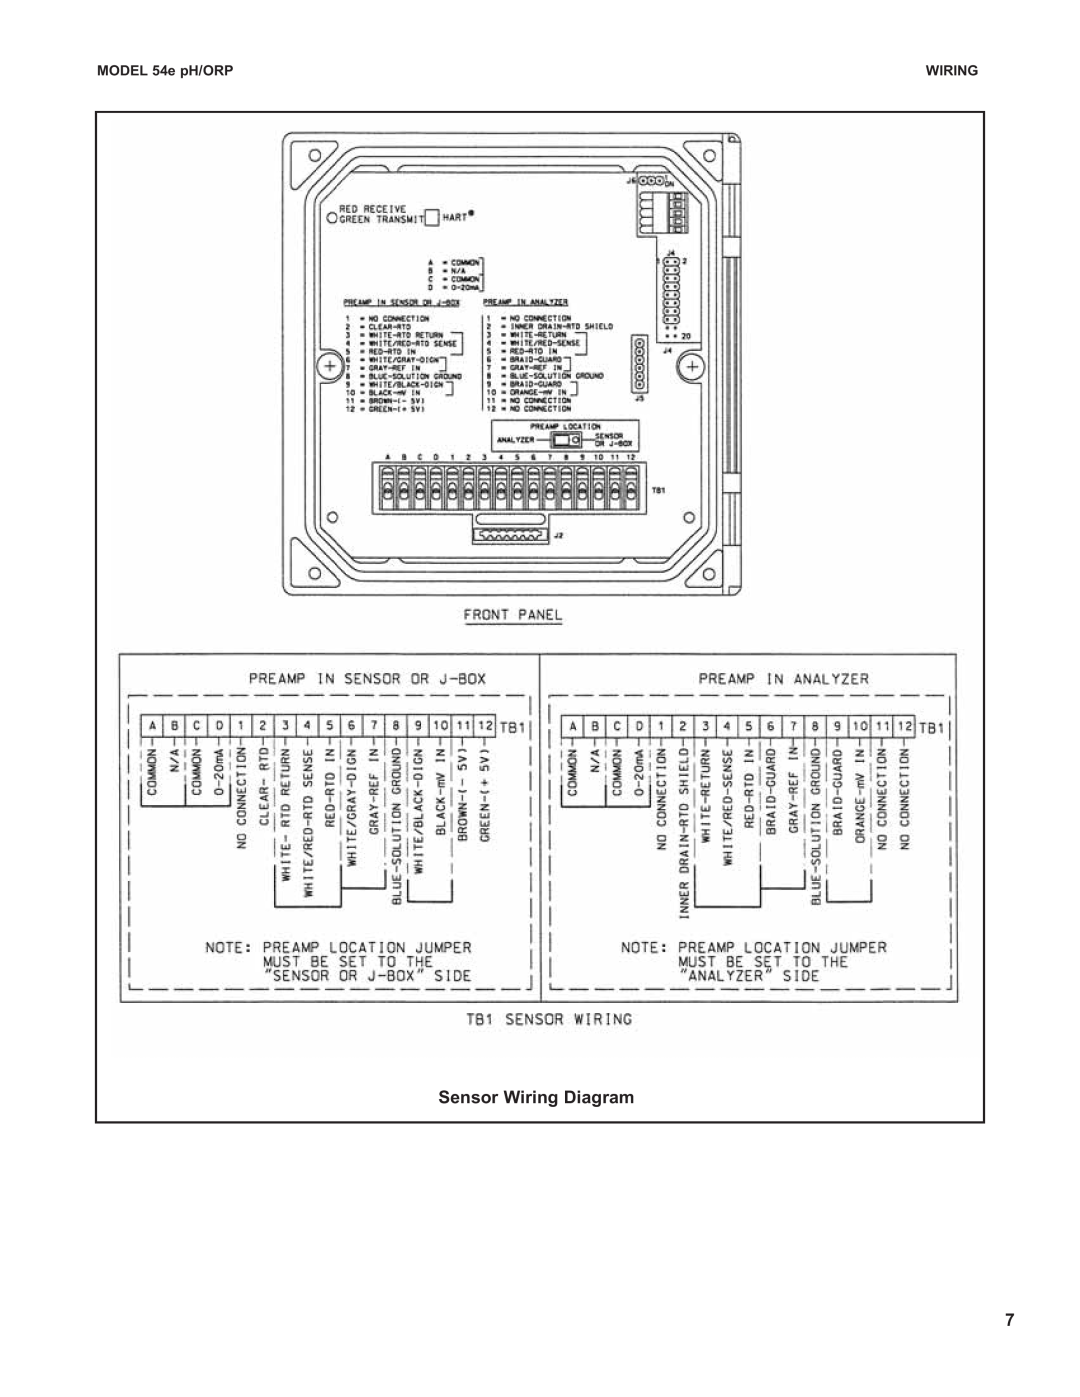 Emerson PN 51A-54epH instruction sheet Sensor Wiring Diagram, MODEL 54e pH/ORP 